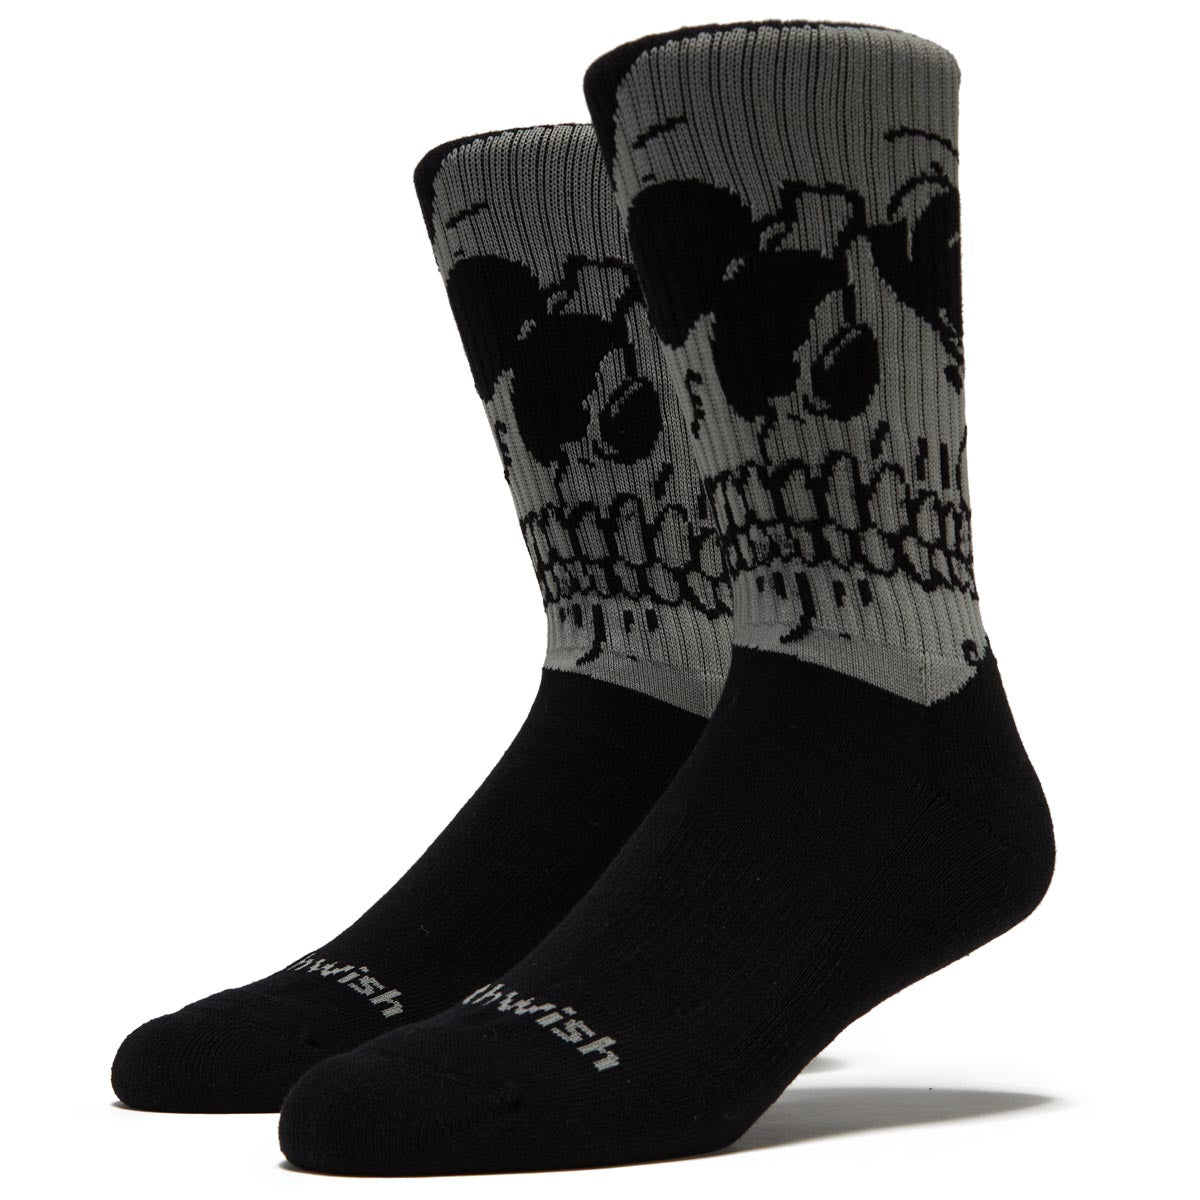 Deathwish Death In Disguise Socks - Black image 1